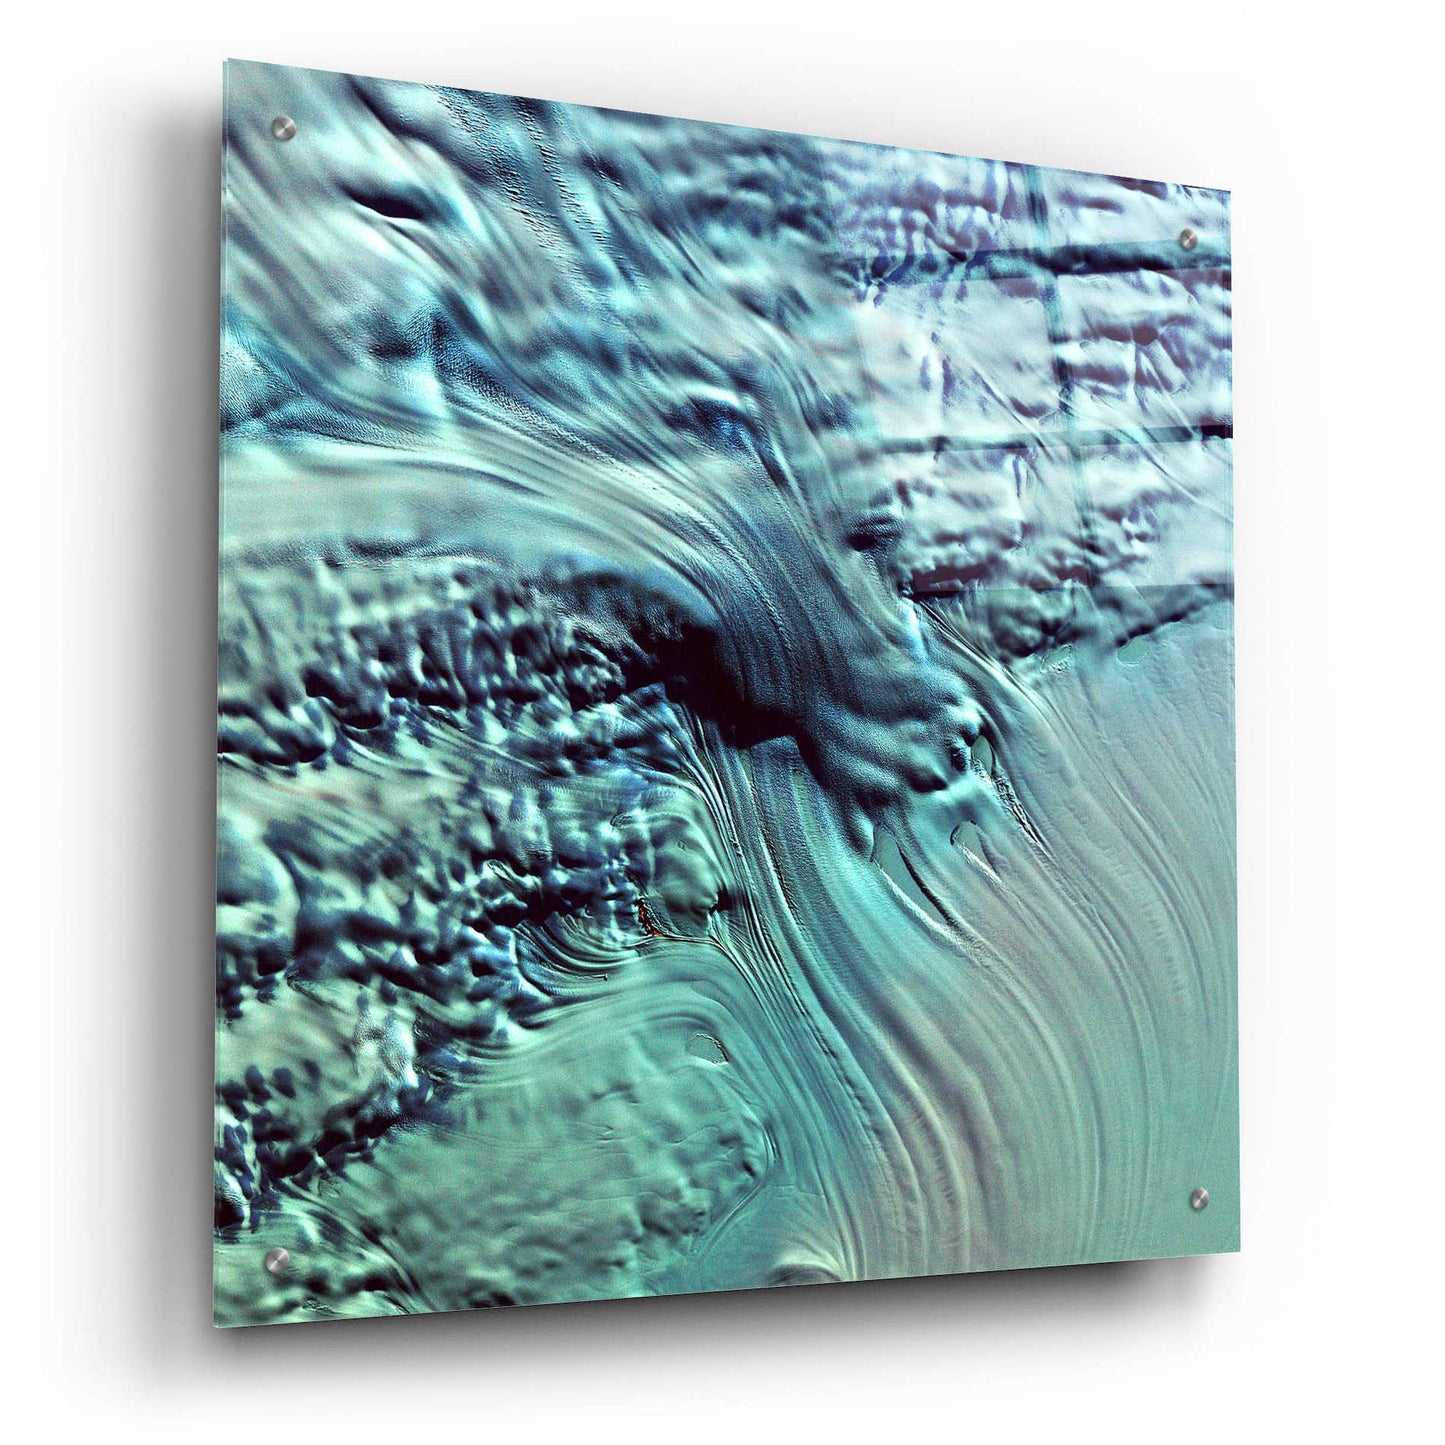 Epic Art 'Earth as Art: Lambert Glacier' Acrylic Glass Wall Art,24x24